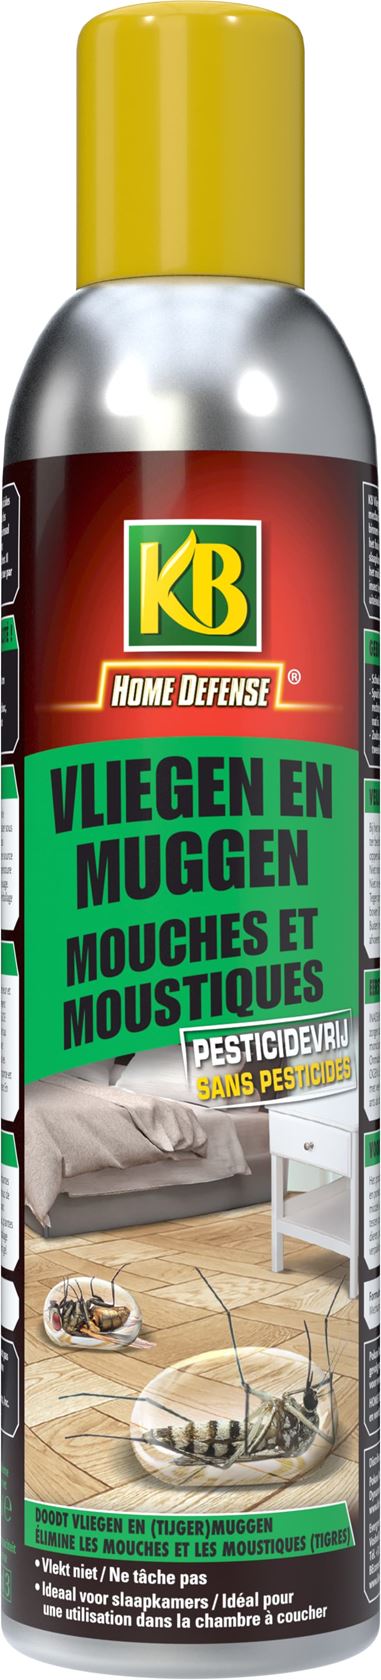 KB-Home-Defense-Aerosol-tegen-vliegen-en-muggen-300-ml-pesticidevrij-